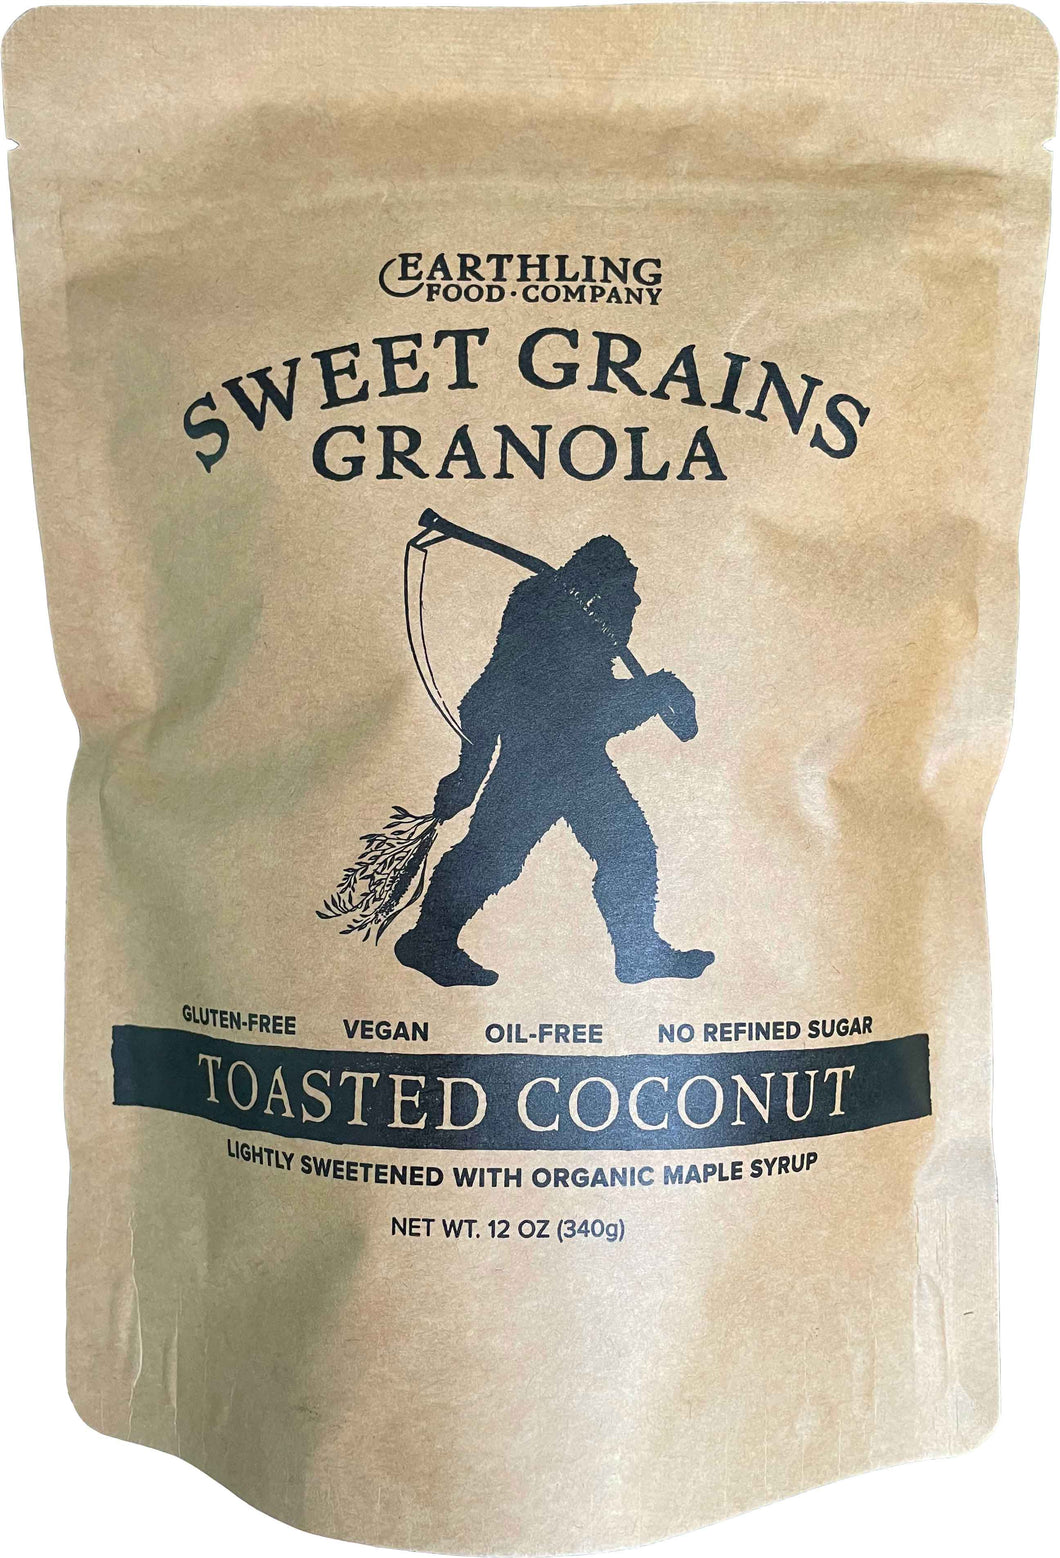 Toasted Coconut Sweet Grains Granola, 12 oz